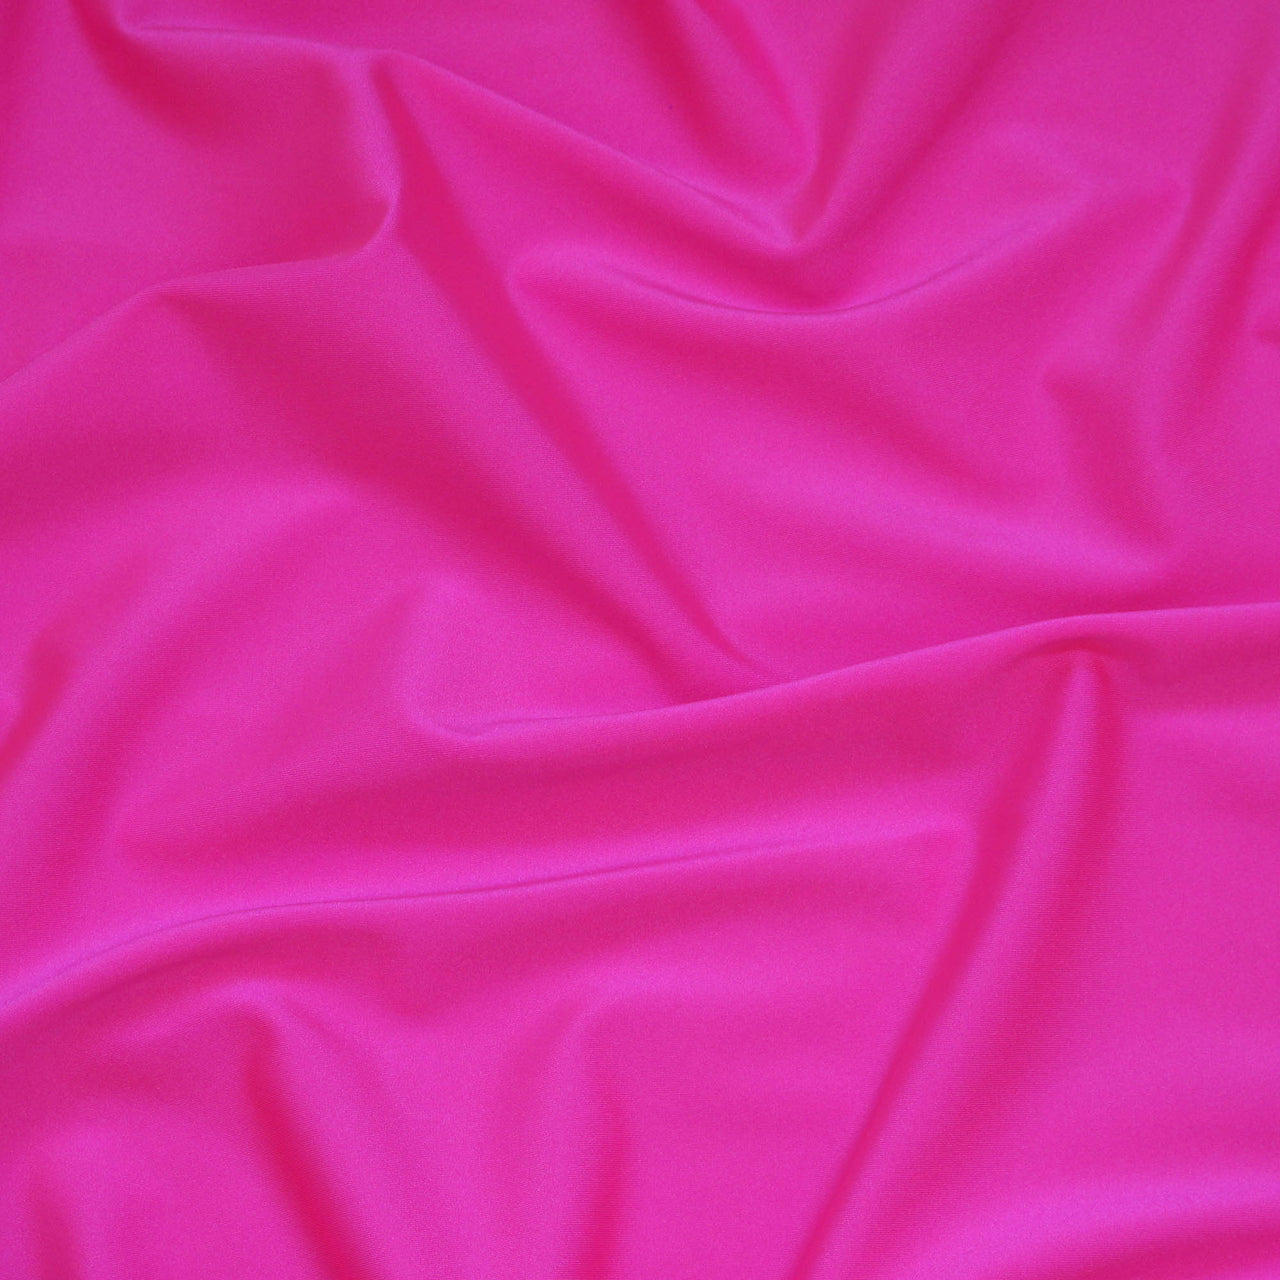 Fluorescent Pink - Nylon Spandex Fabric - 4 Way All Way Stretch Superior Quality - Leotards, Dancewear